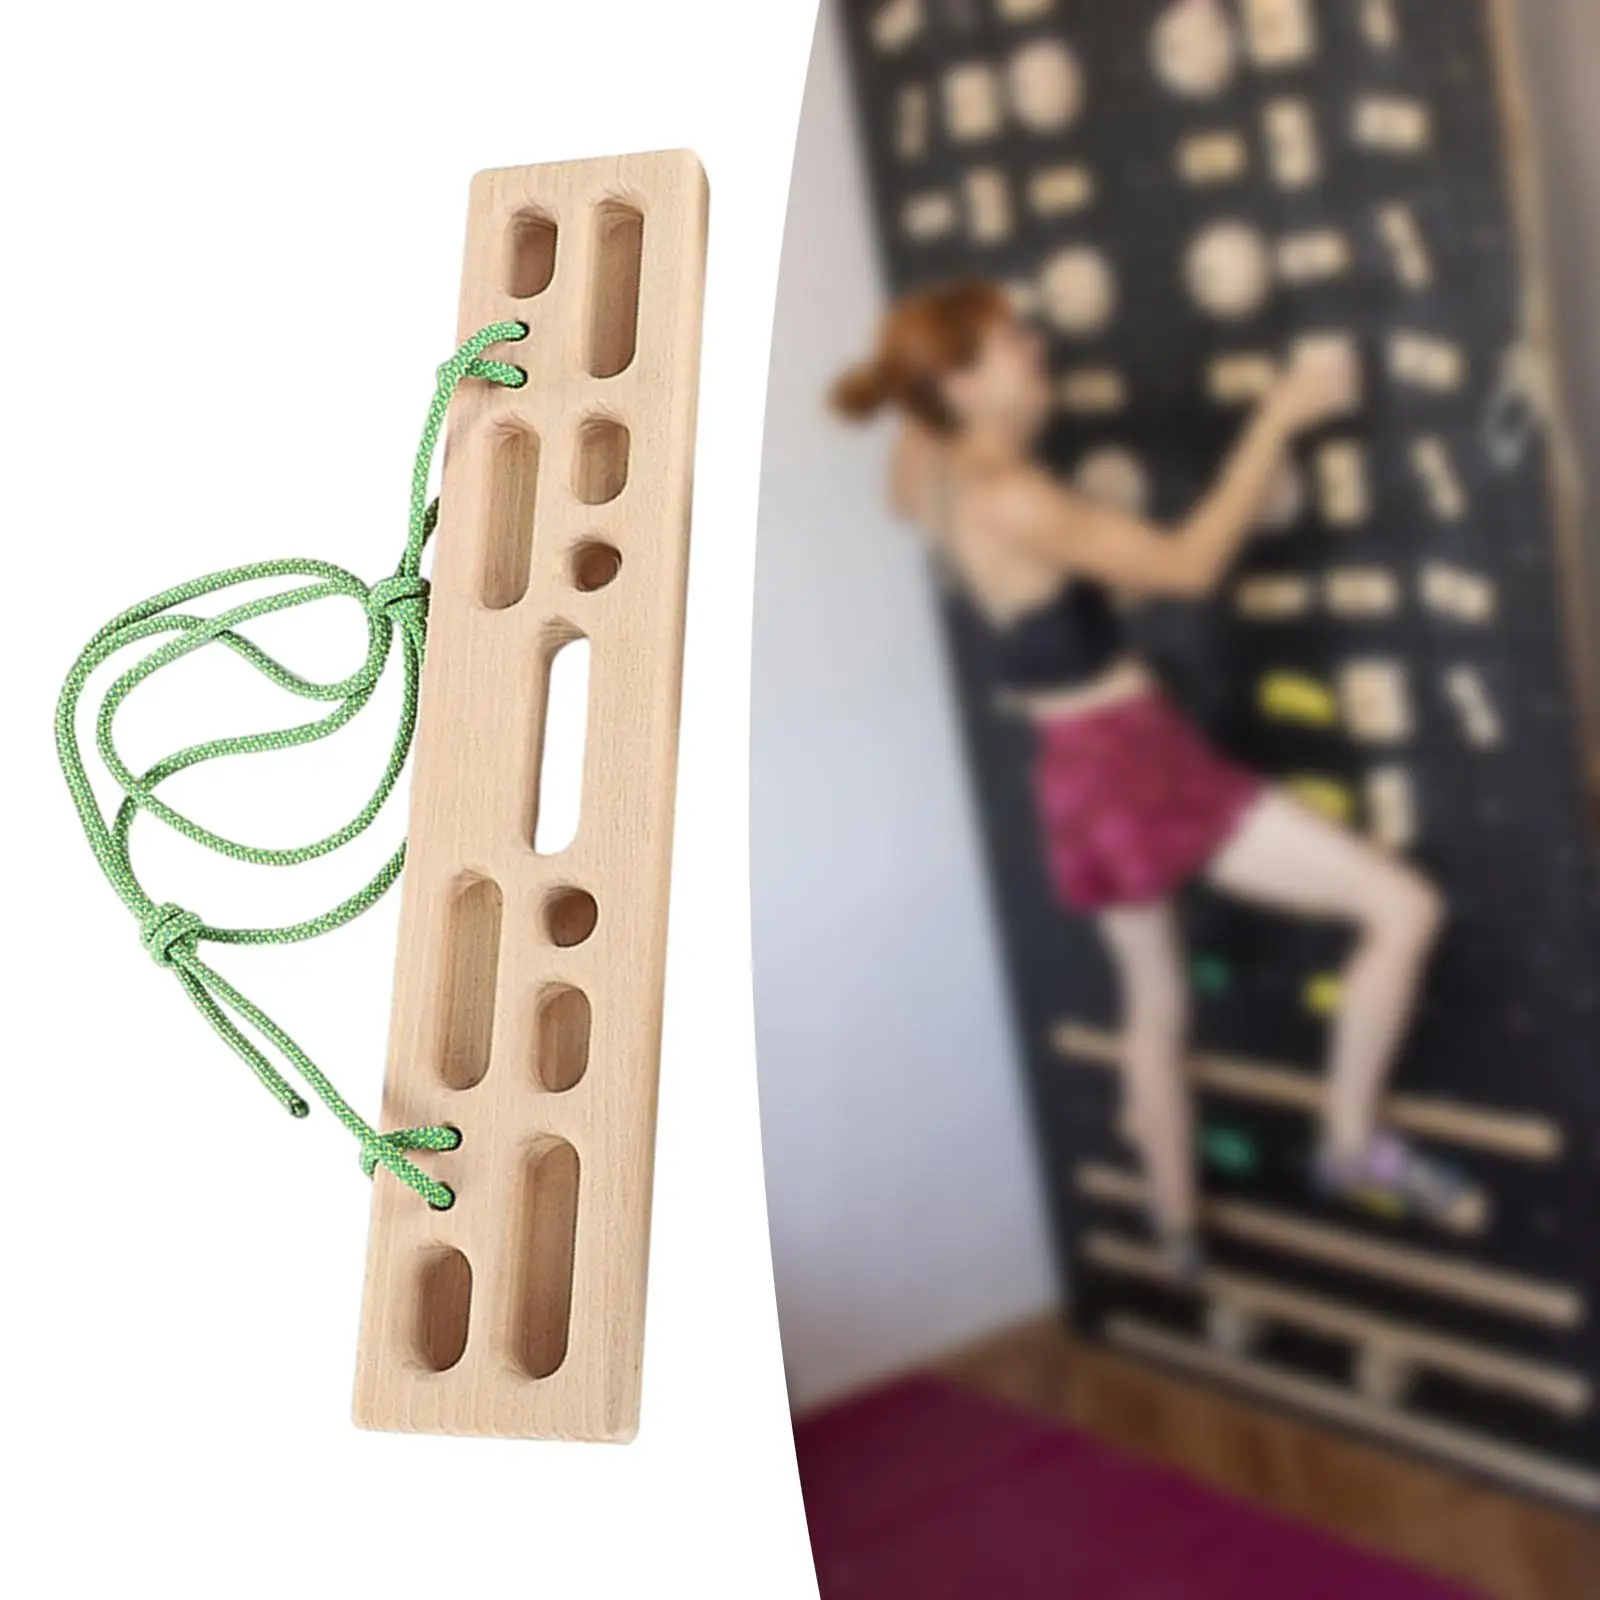 Climbing Hangboard Climbing Fingerboard Rock Climbing Training Board Hang Board for Indoor Outdoor Doorway Home Beginners